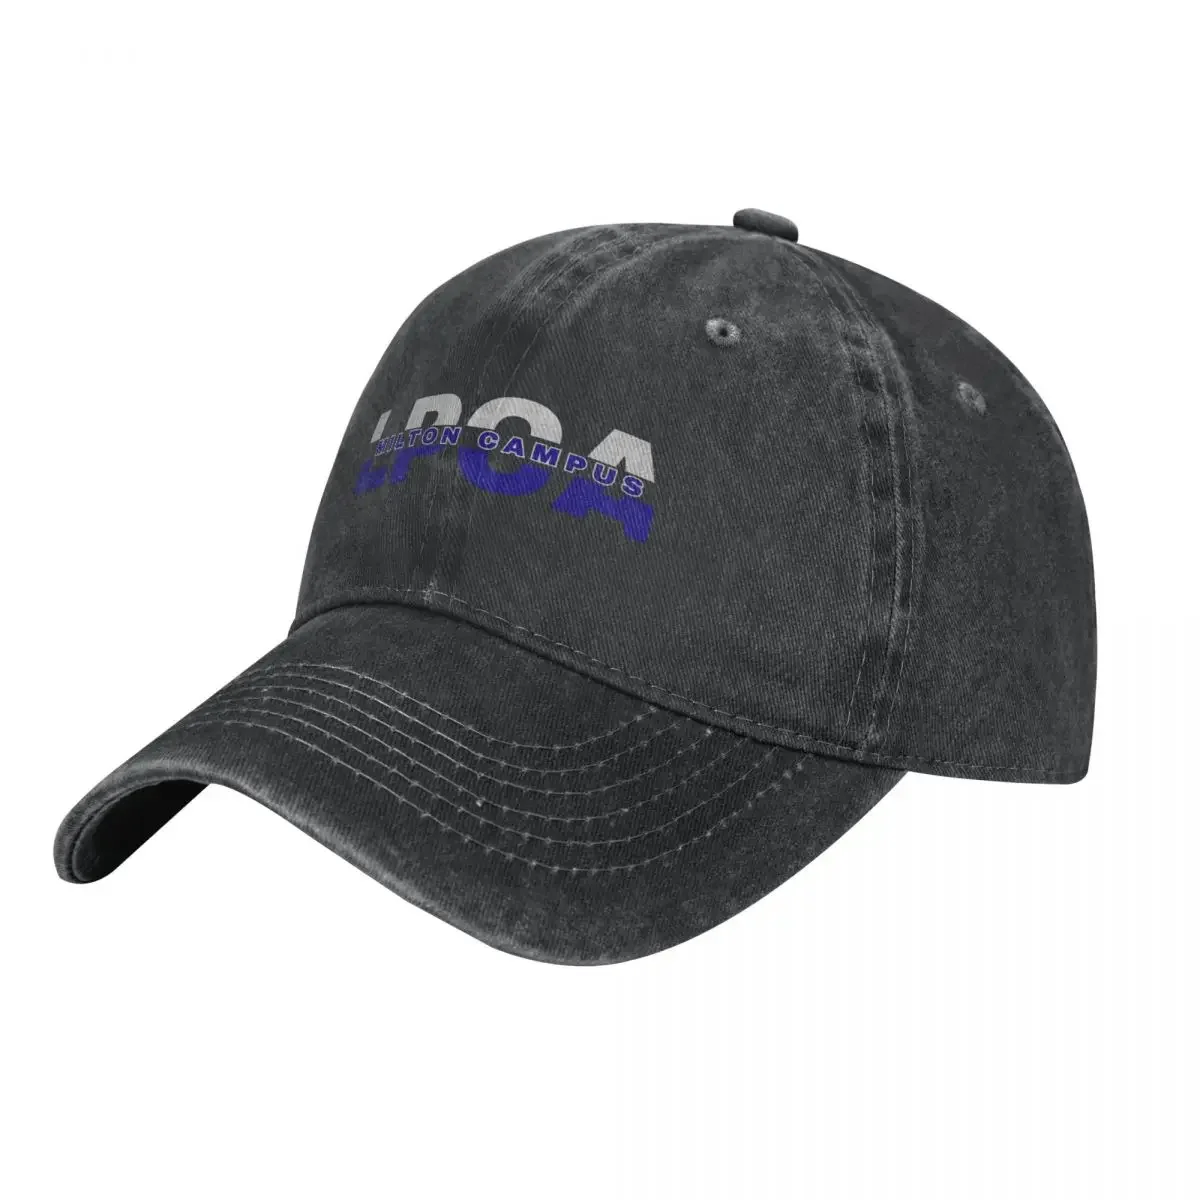 

LPCA - MILTON CAMPUS Cowboy Hat Sun Cap Rugby Elegant Women's Hats Men's